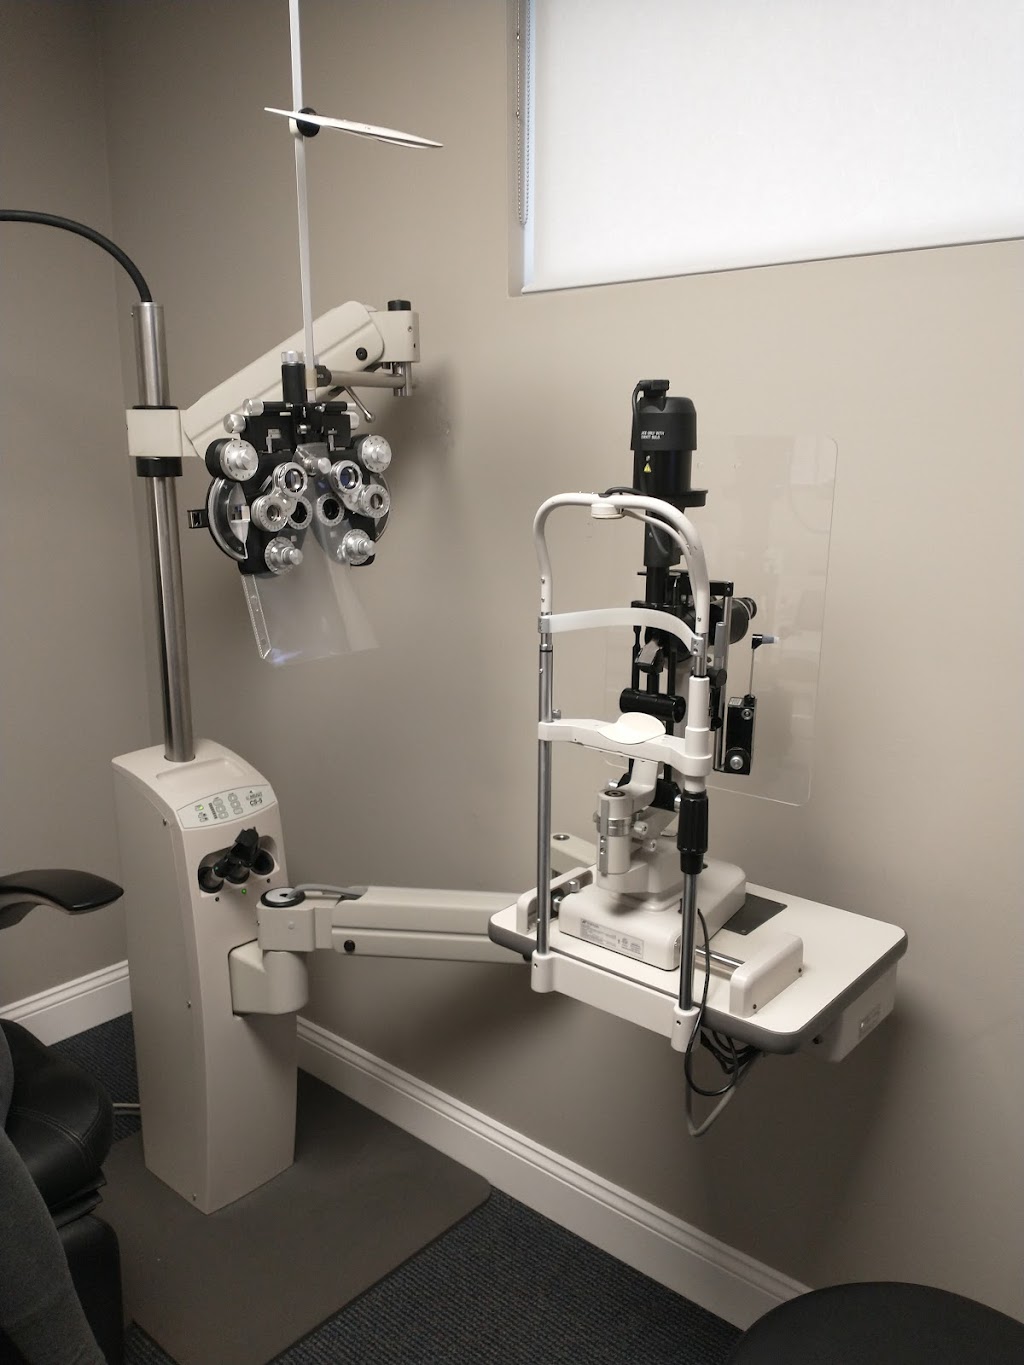 Dr.s Eyecare Center | 4423 US-130, Burlington, NJ 08016 | Phone: (609) 386-0202